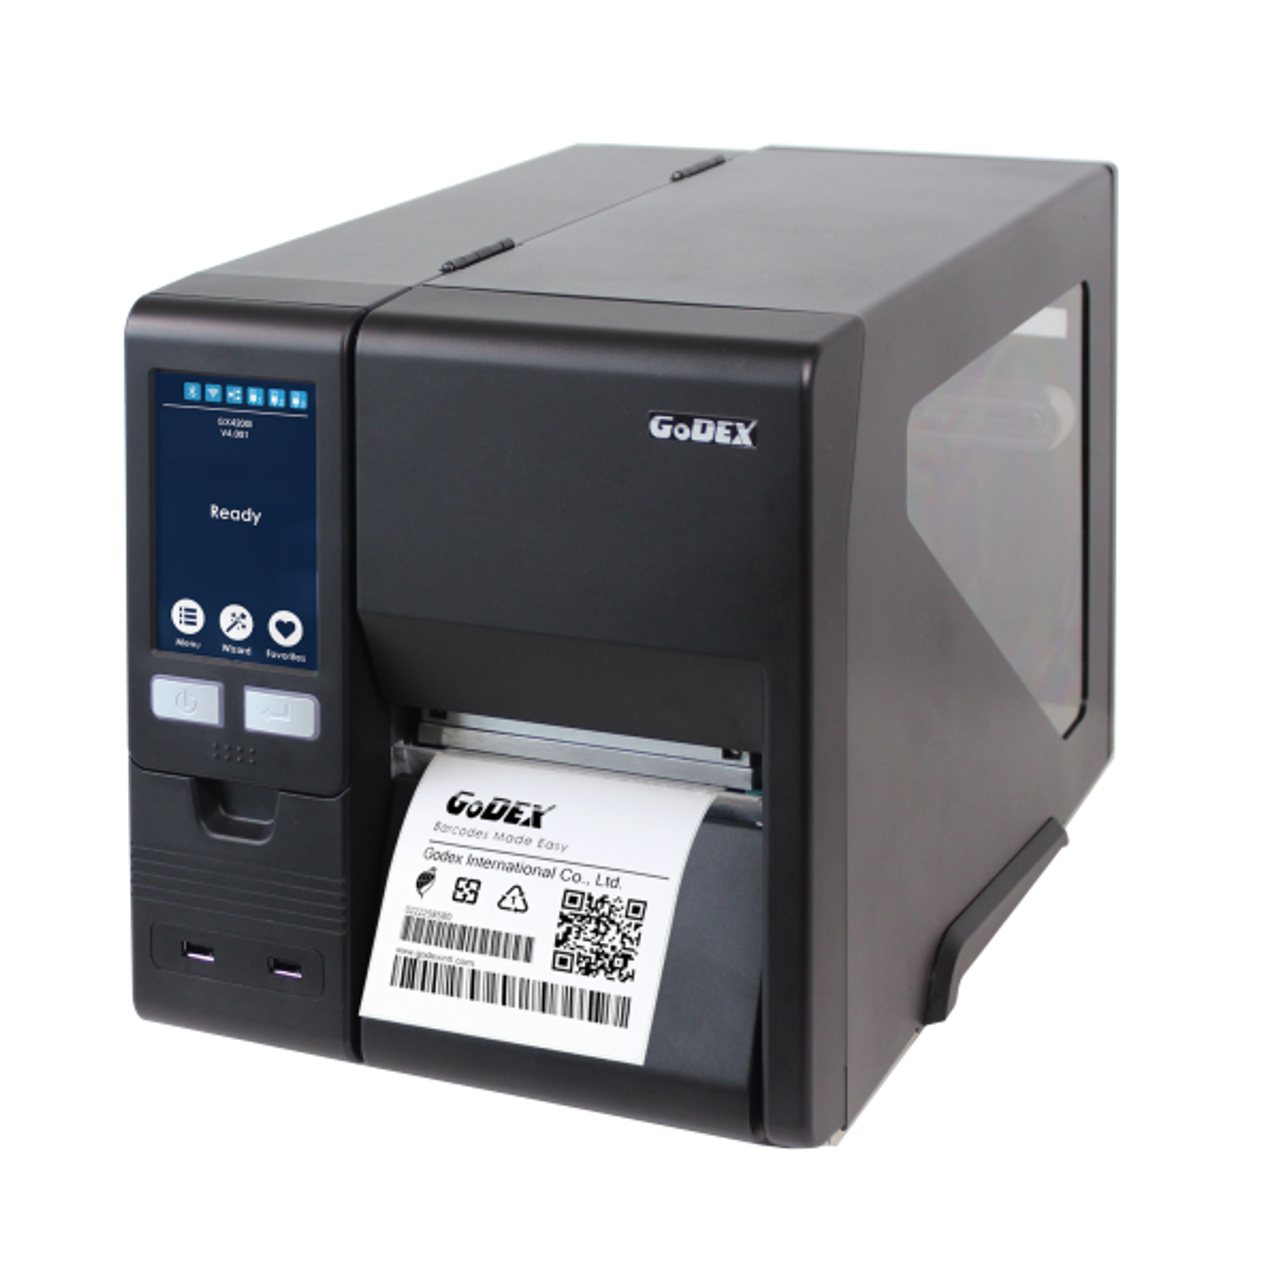 Kan ikke lide ukuelige Arctic Godex GX4600i 4" High Speed Industrial Thermal Transfer Barcode Printer,  600 dpi, 8 ips, USB, Ethernet, 5" Color Touchscreen 011-X6i001-000